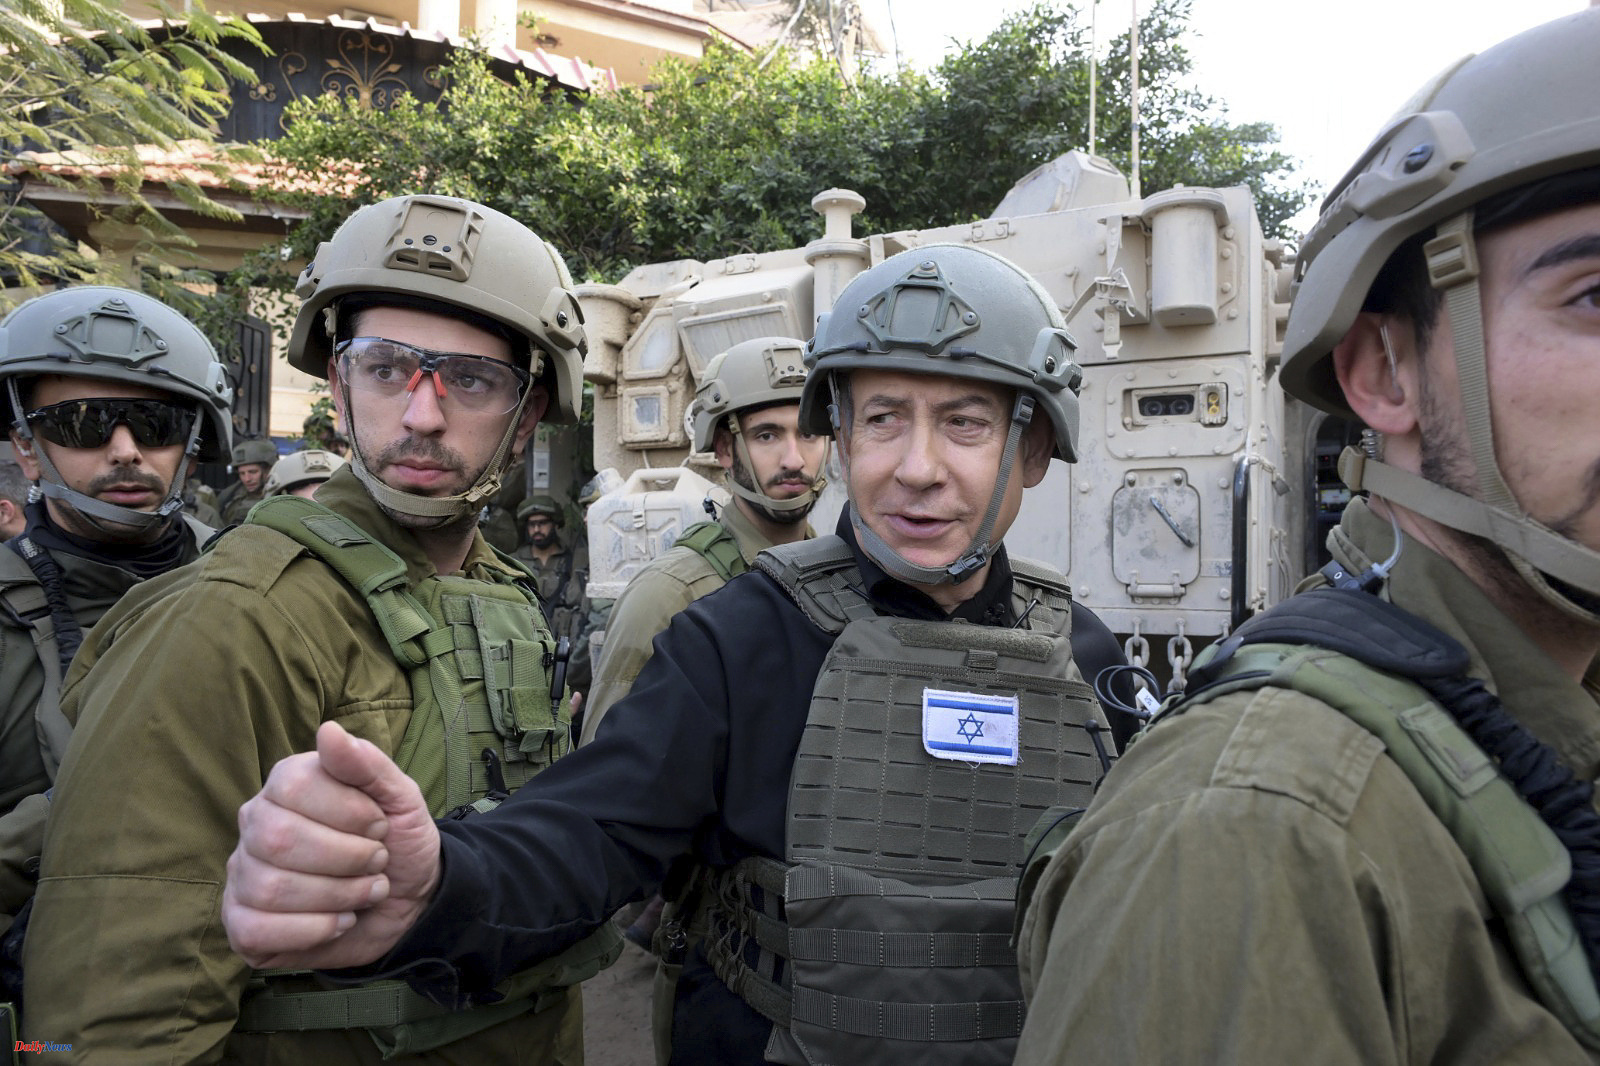 War in Gaza Netanyahu intensifies war: "We are facing monsters"